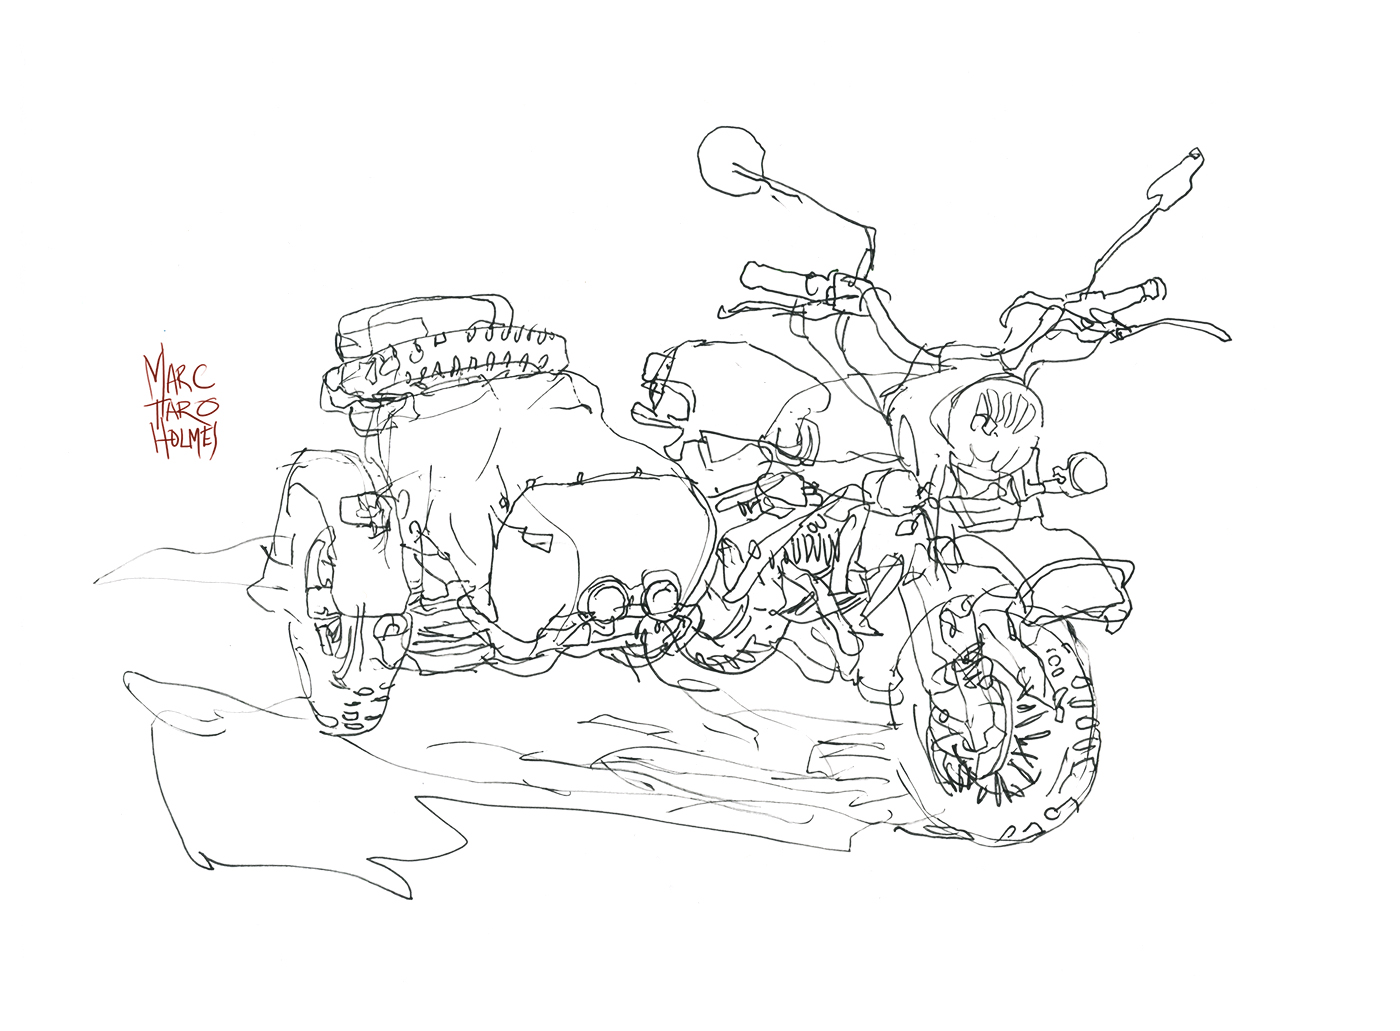 Motorcycle Line Drawing At Getdrawings Free Download